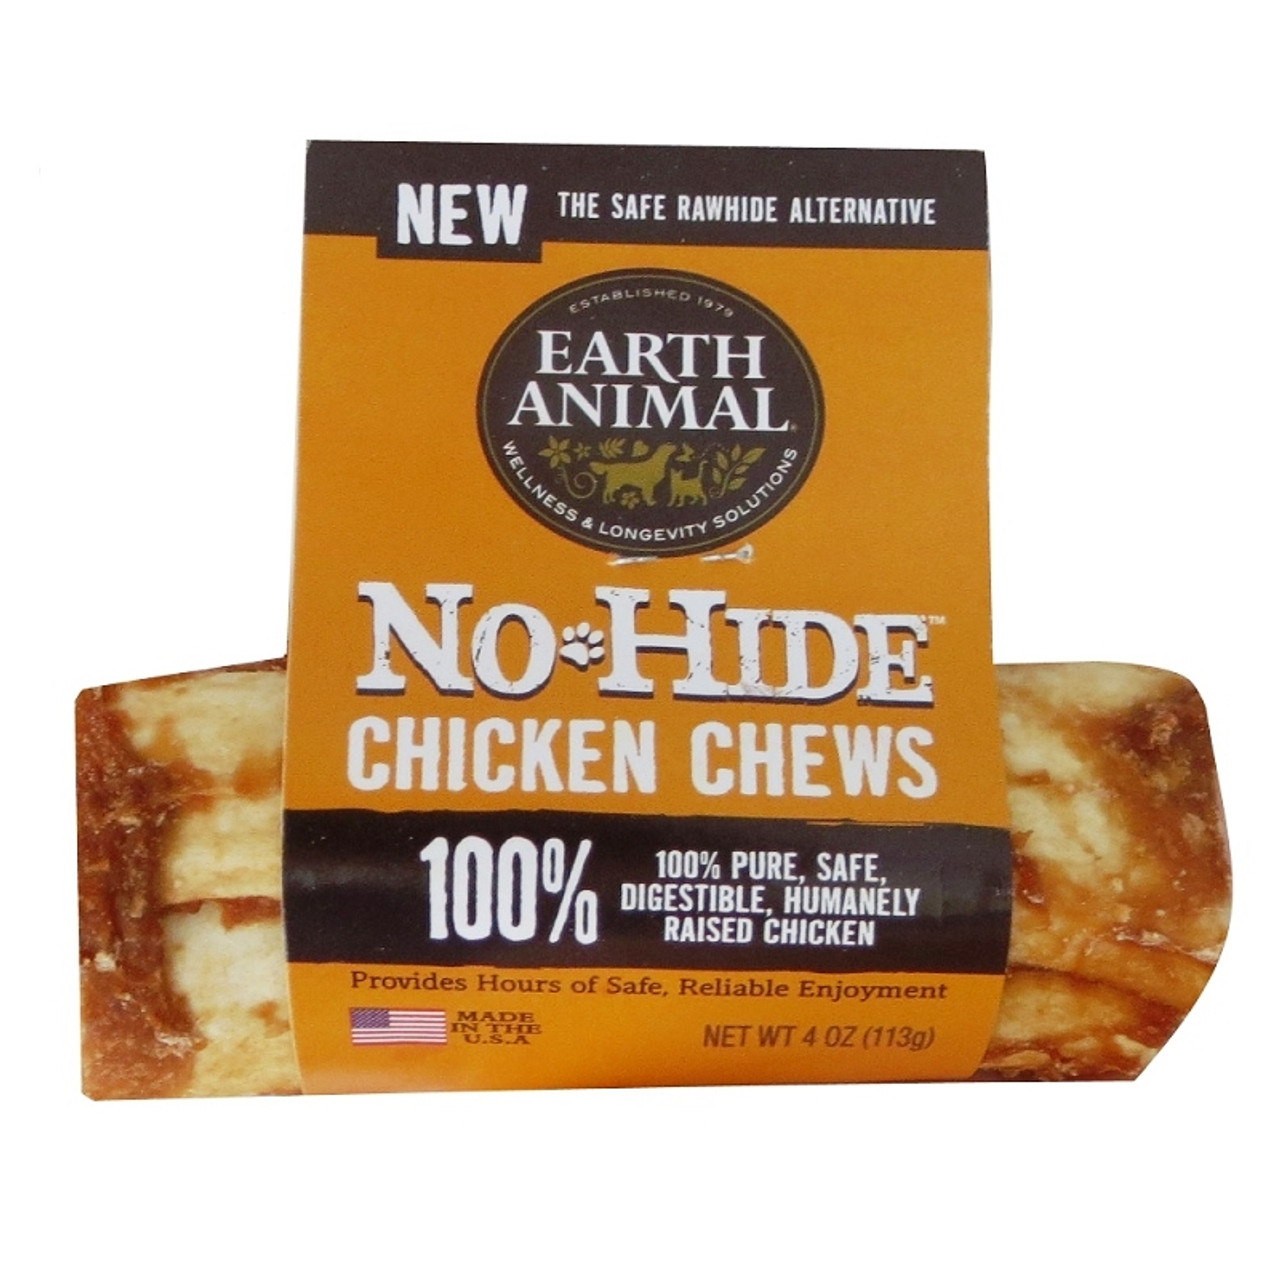 hide chews